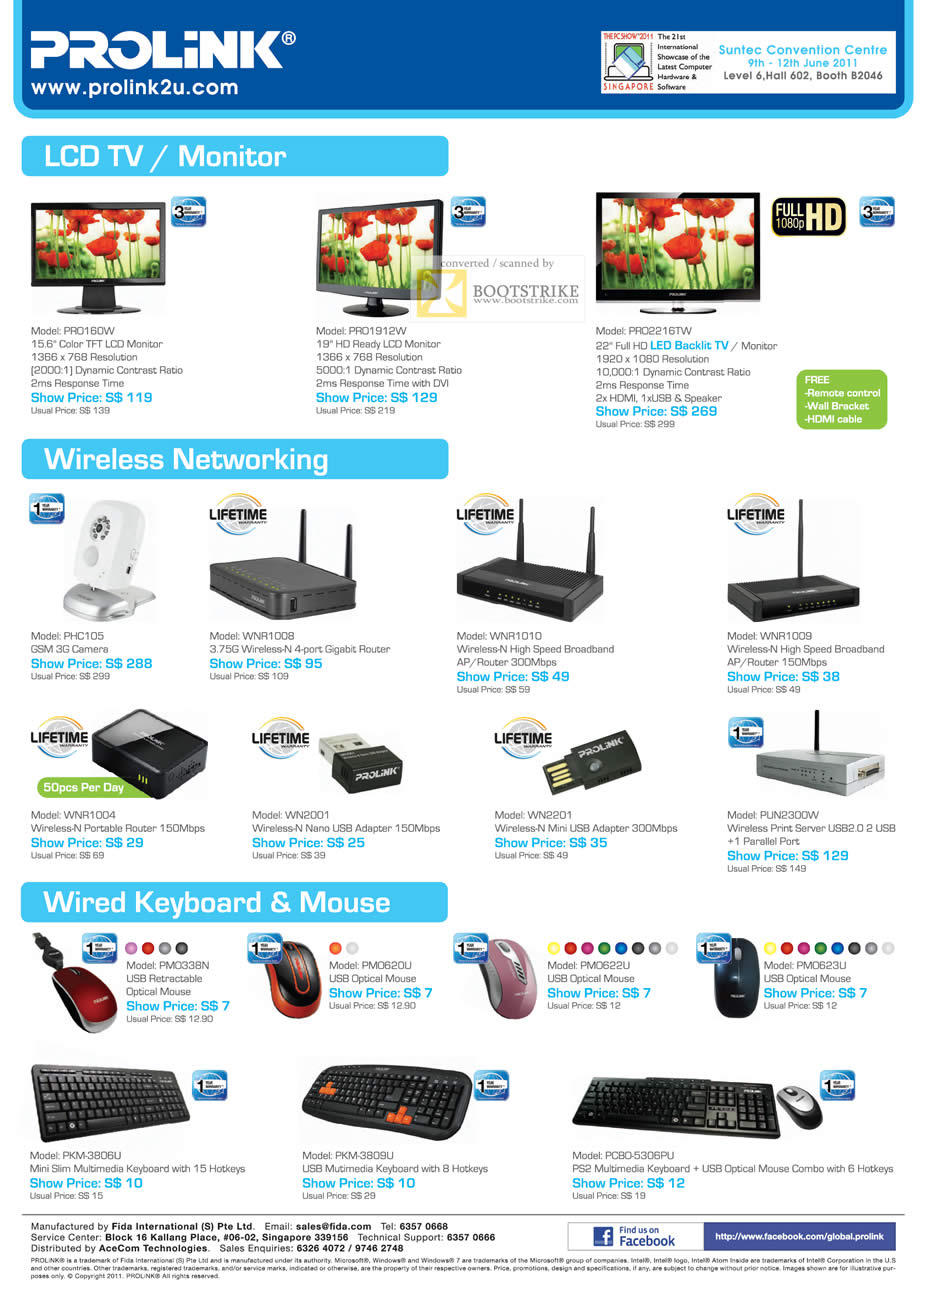 PC Show 2011 price list image brochure of Prolink Monitors TV Wireless Router Keyboard Mouse PRO160W PRO1912W PRO2216TW WNR1004 WNR1009 WNR2001 USB Adapter PKM